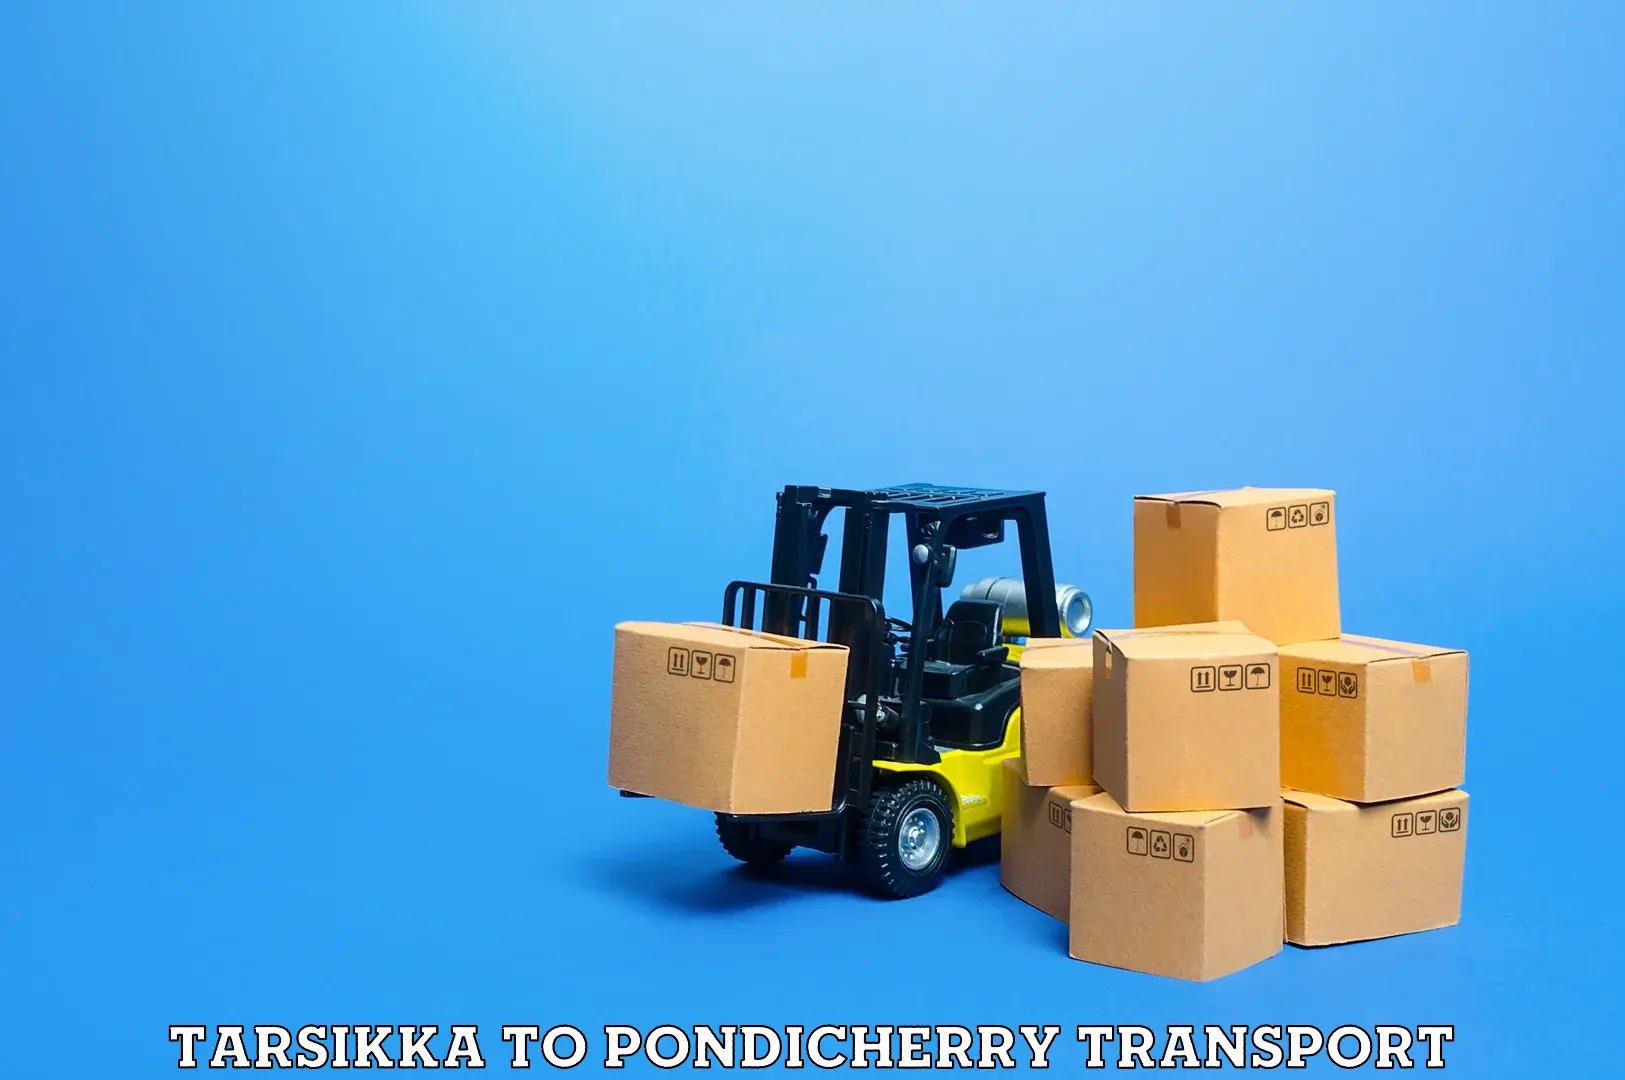 Pick up transport service Tarsikka to Pondicherry